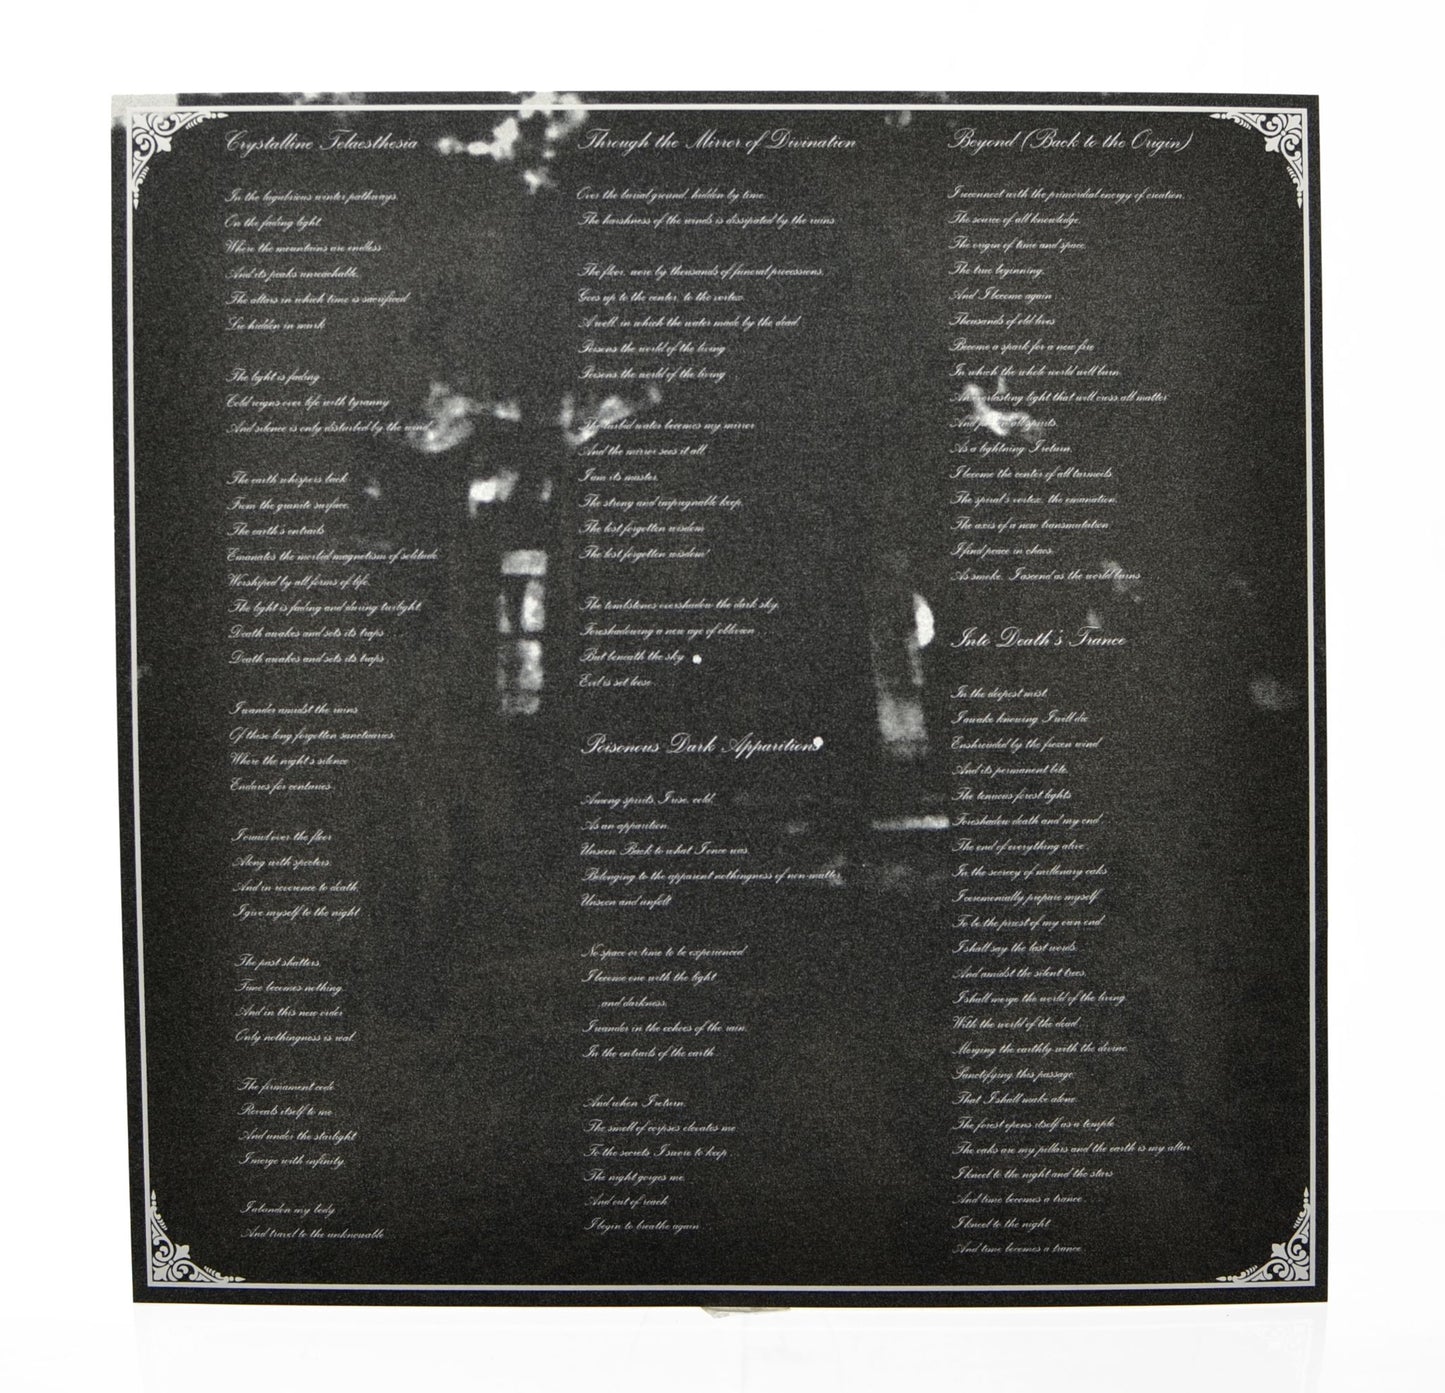 CANDELABRUM - Nocturnal Trance (12" LP) Black Vinyl